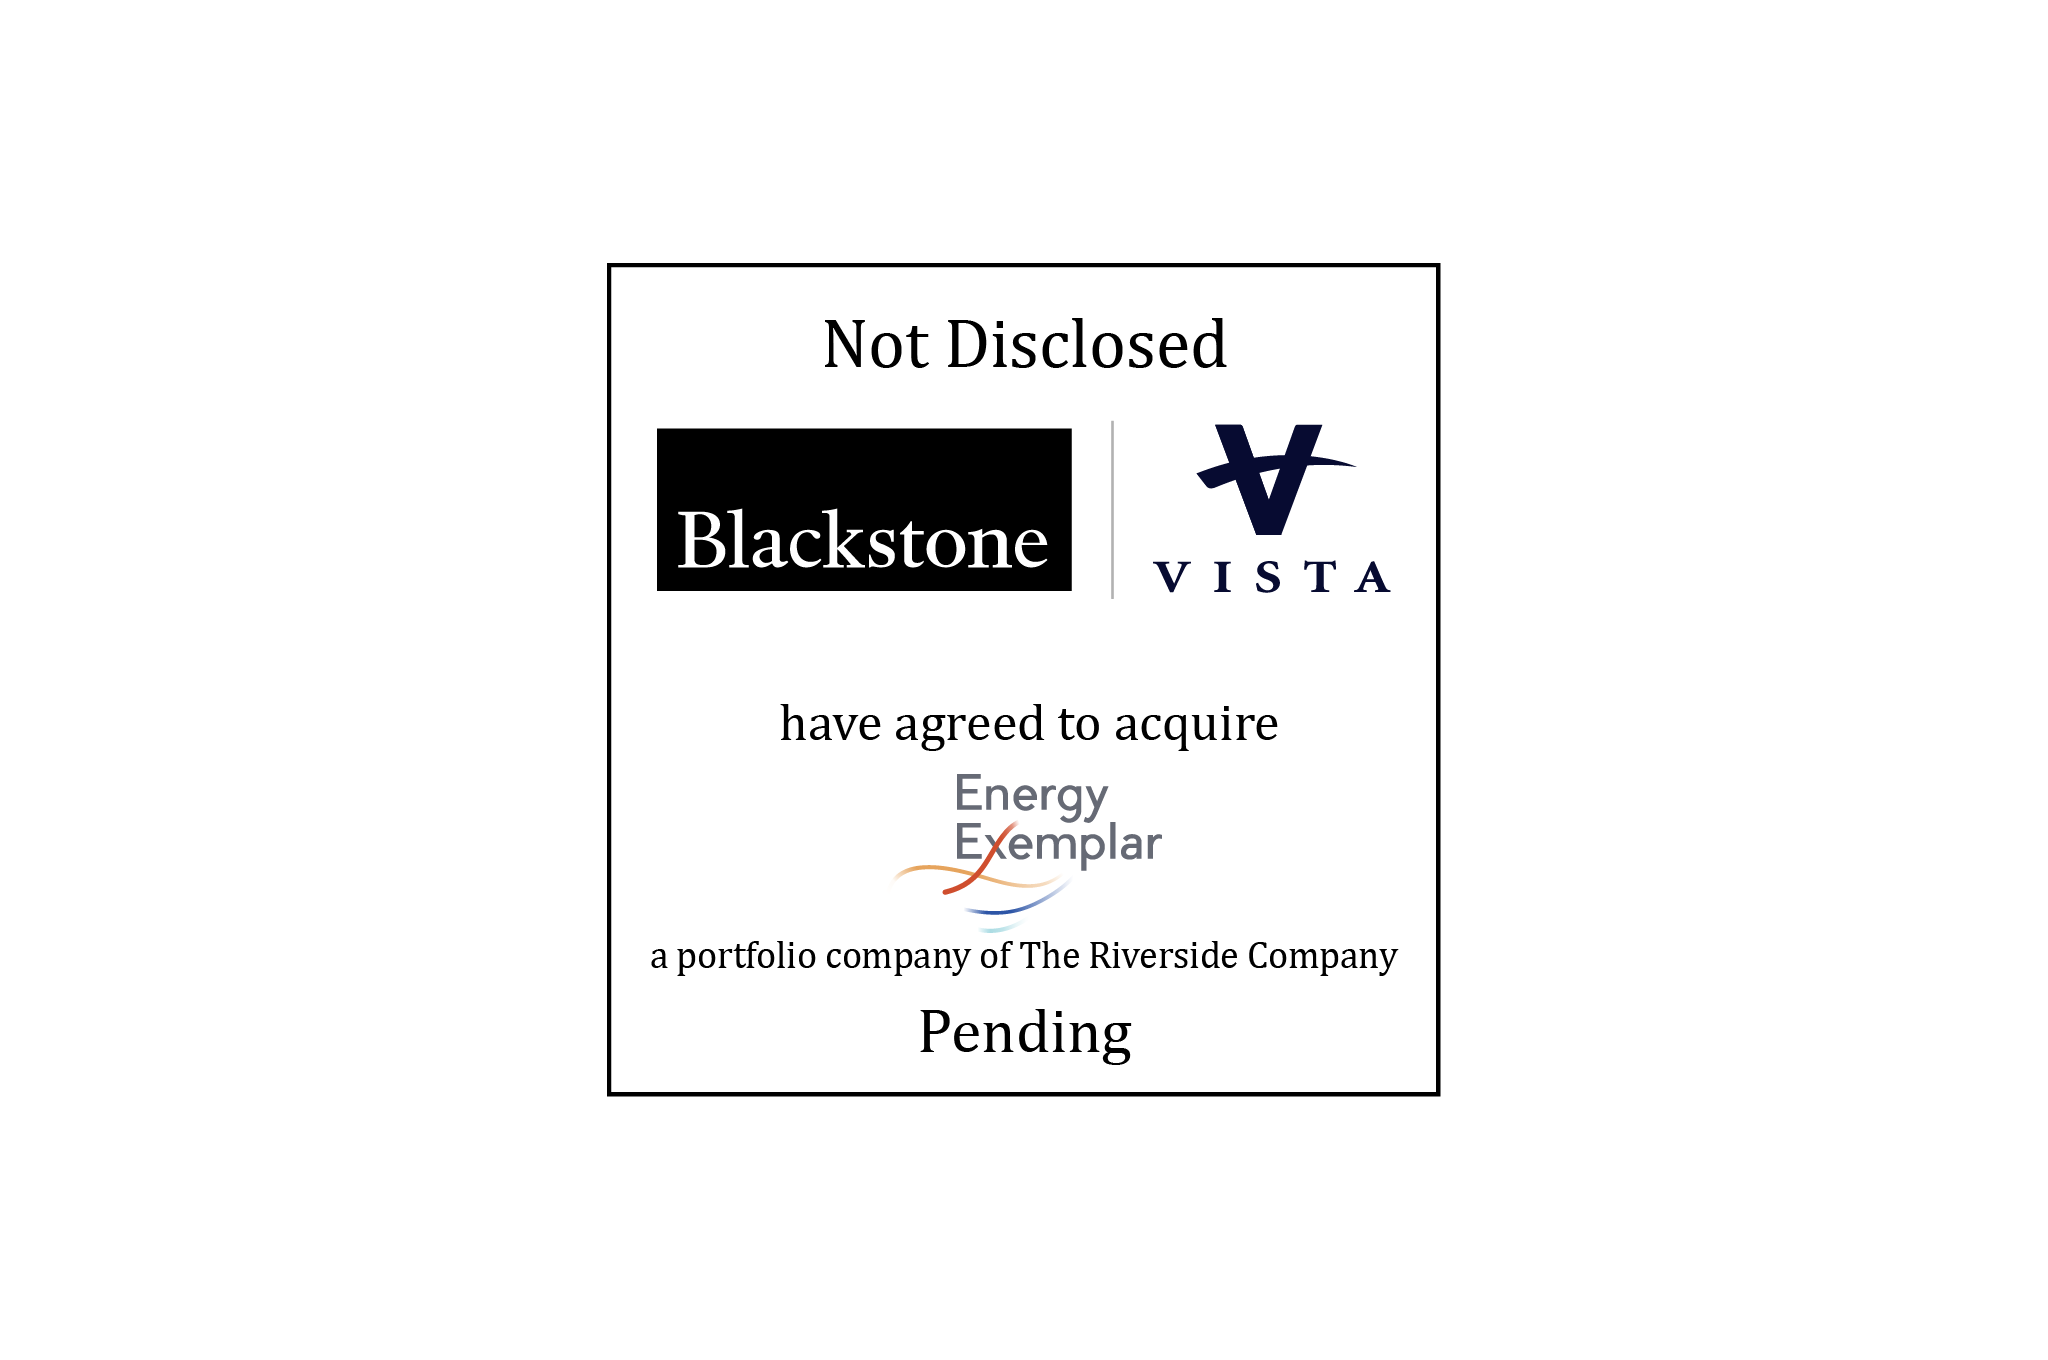 Not Disclosed | Blackstone (logo) Vista (logo) have agreed to acquire Energy Exemplar (logo), a portfolio company of The Riverside Company | Pending